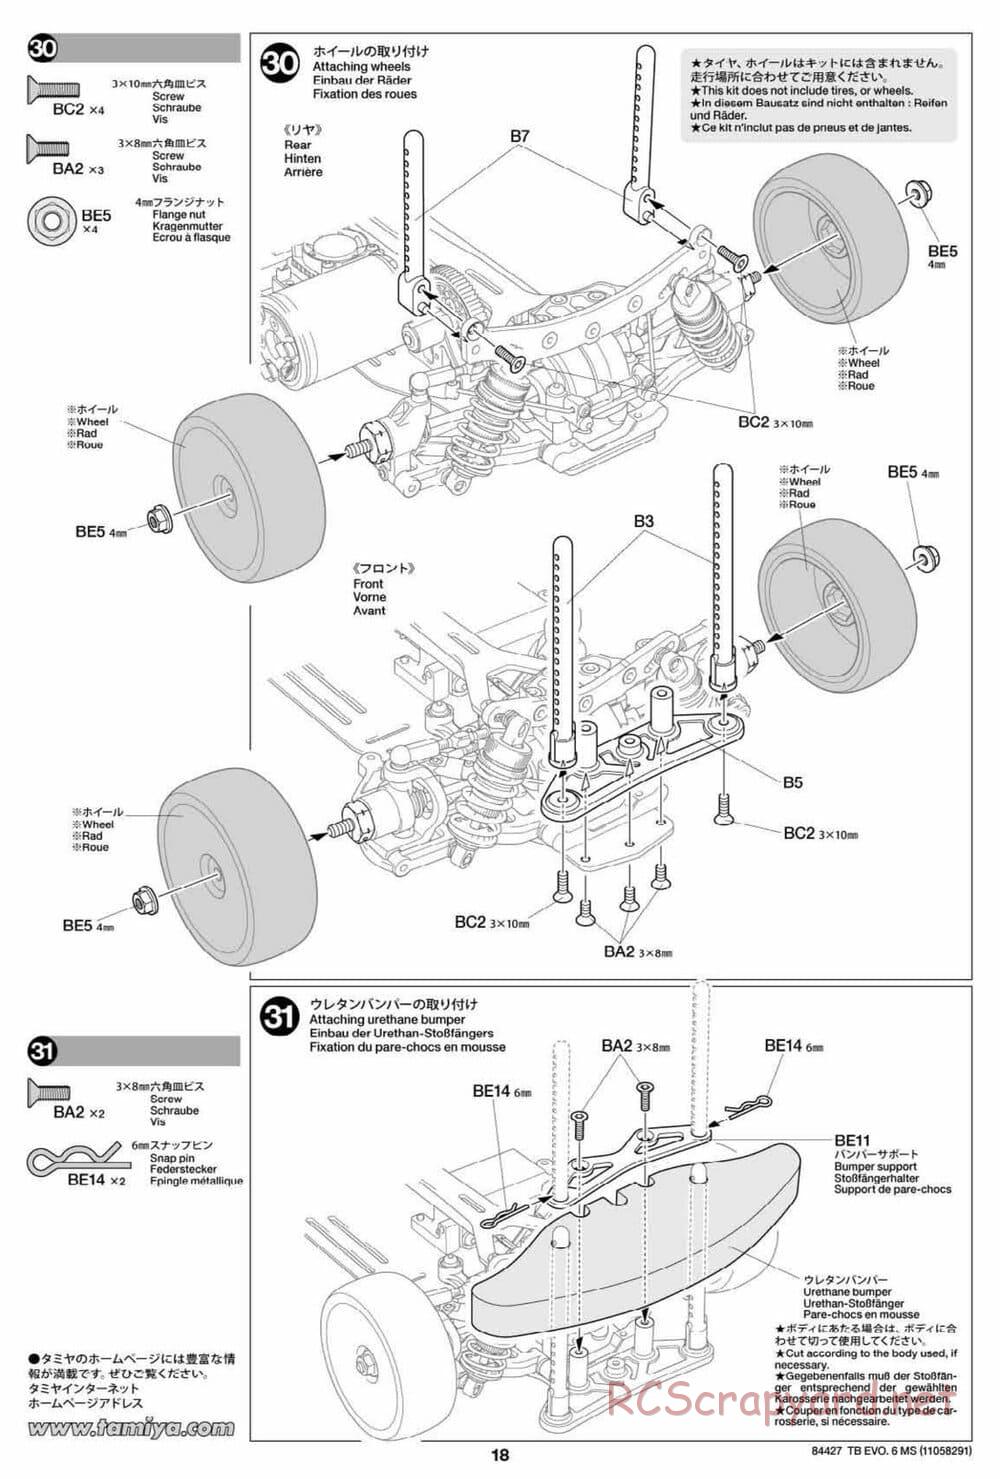 Tamiya - TB Evo.6 MS Chassis - Manual - Page 18